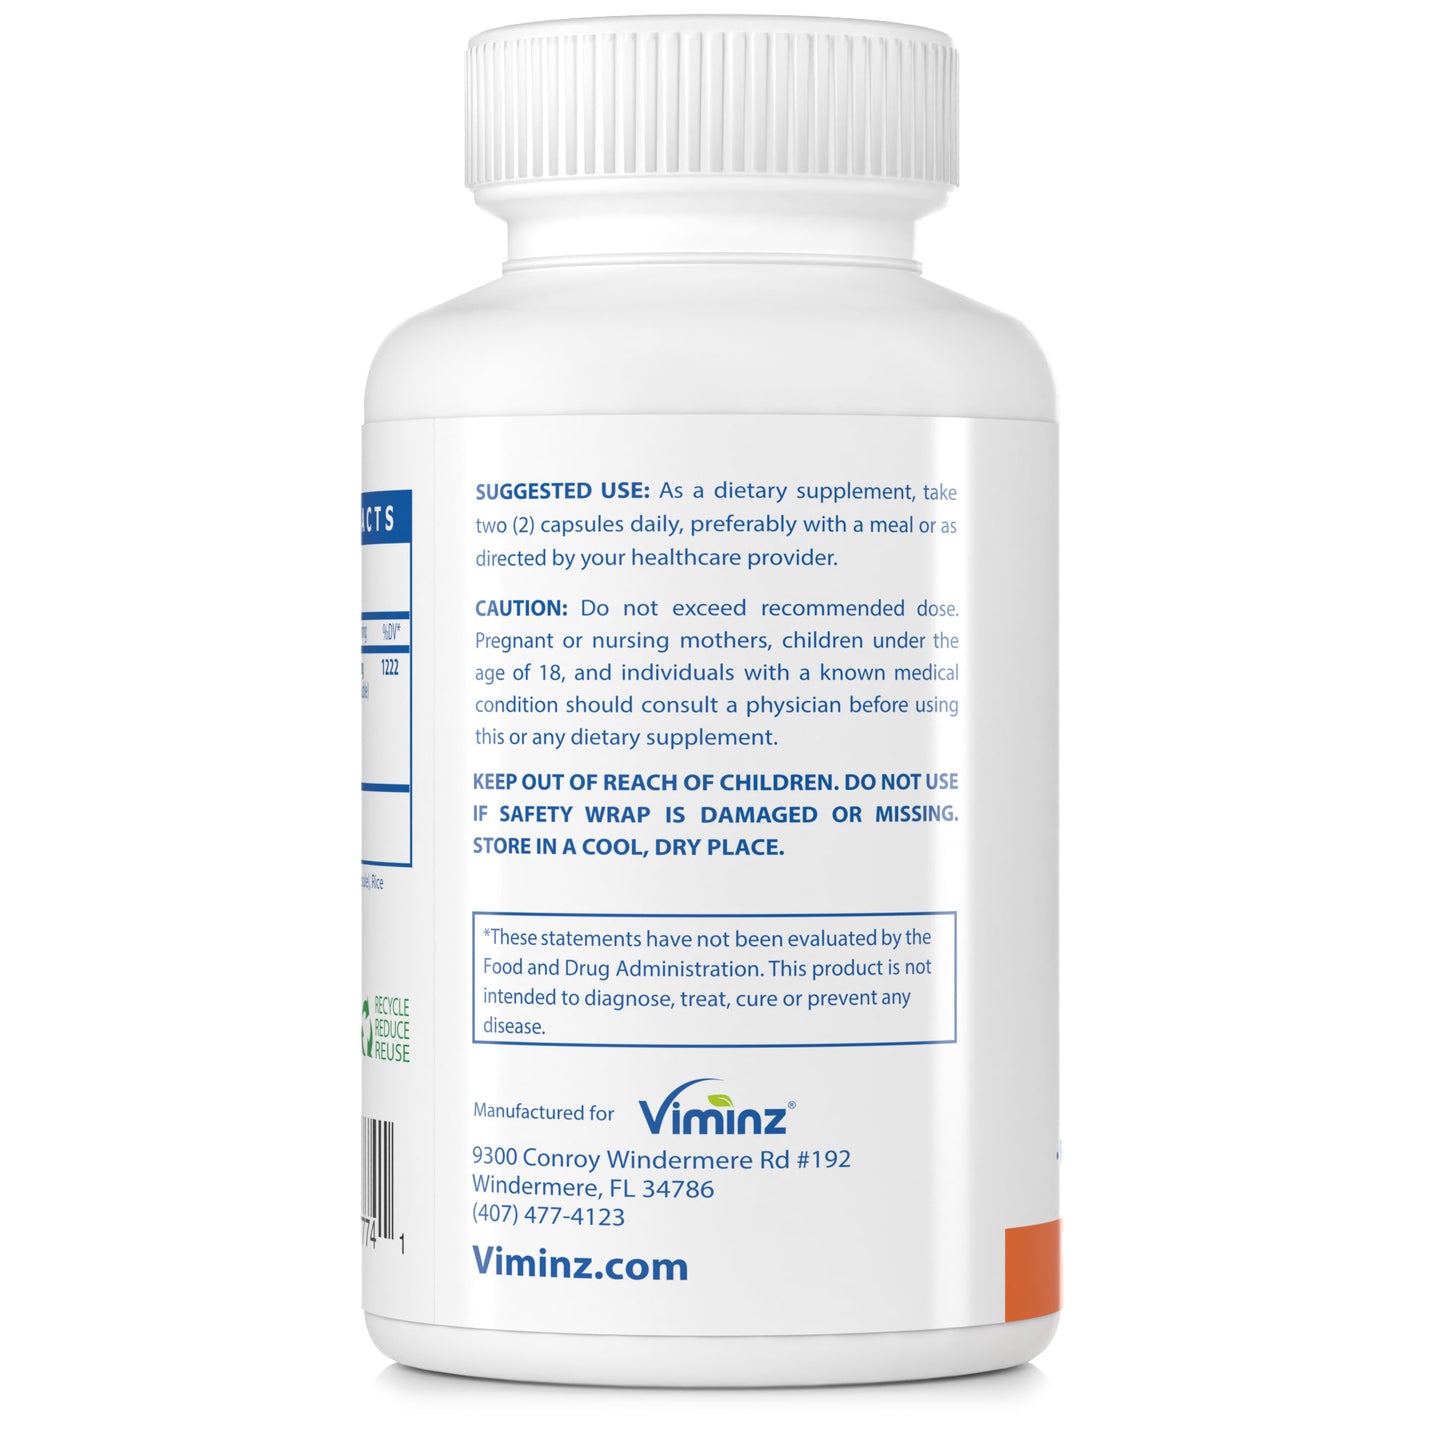 Vitamina C liposomiale 1200 mg, 180 capsule vegetali, fornitura per 3 mesi